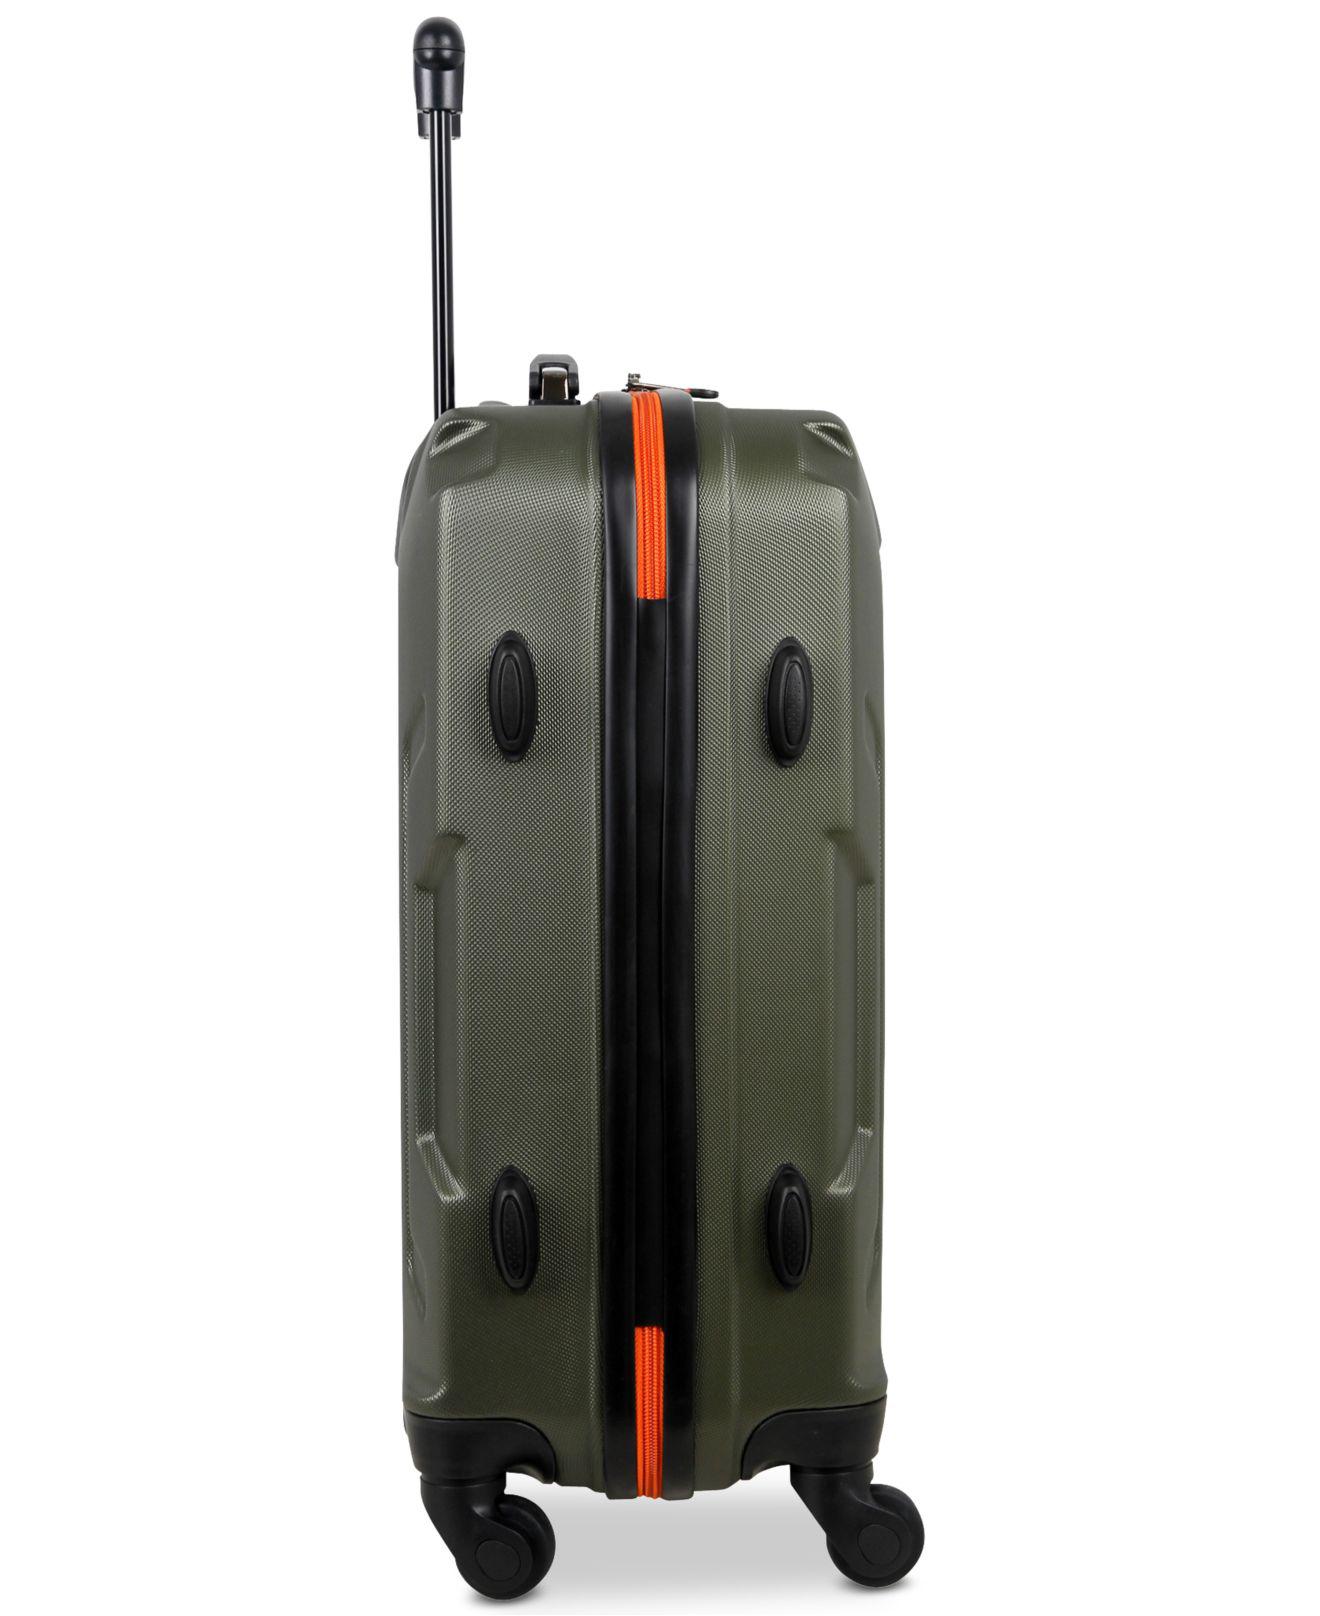 Timberland Boscawen 28" Hardside Spinner Suitcase in Burnt Olive (Green)  for Men - Lyst